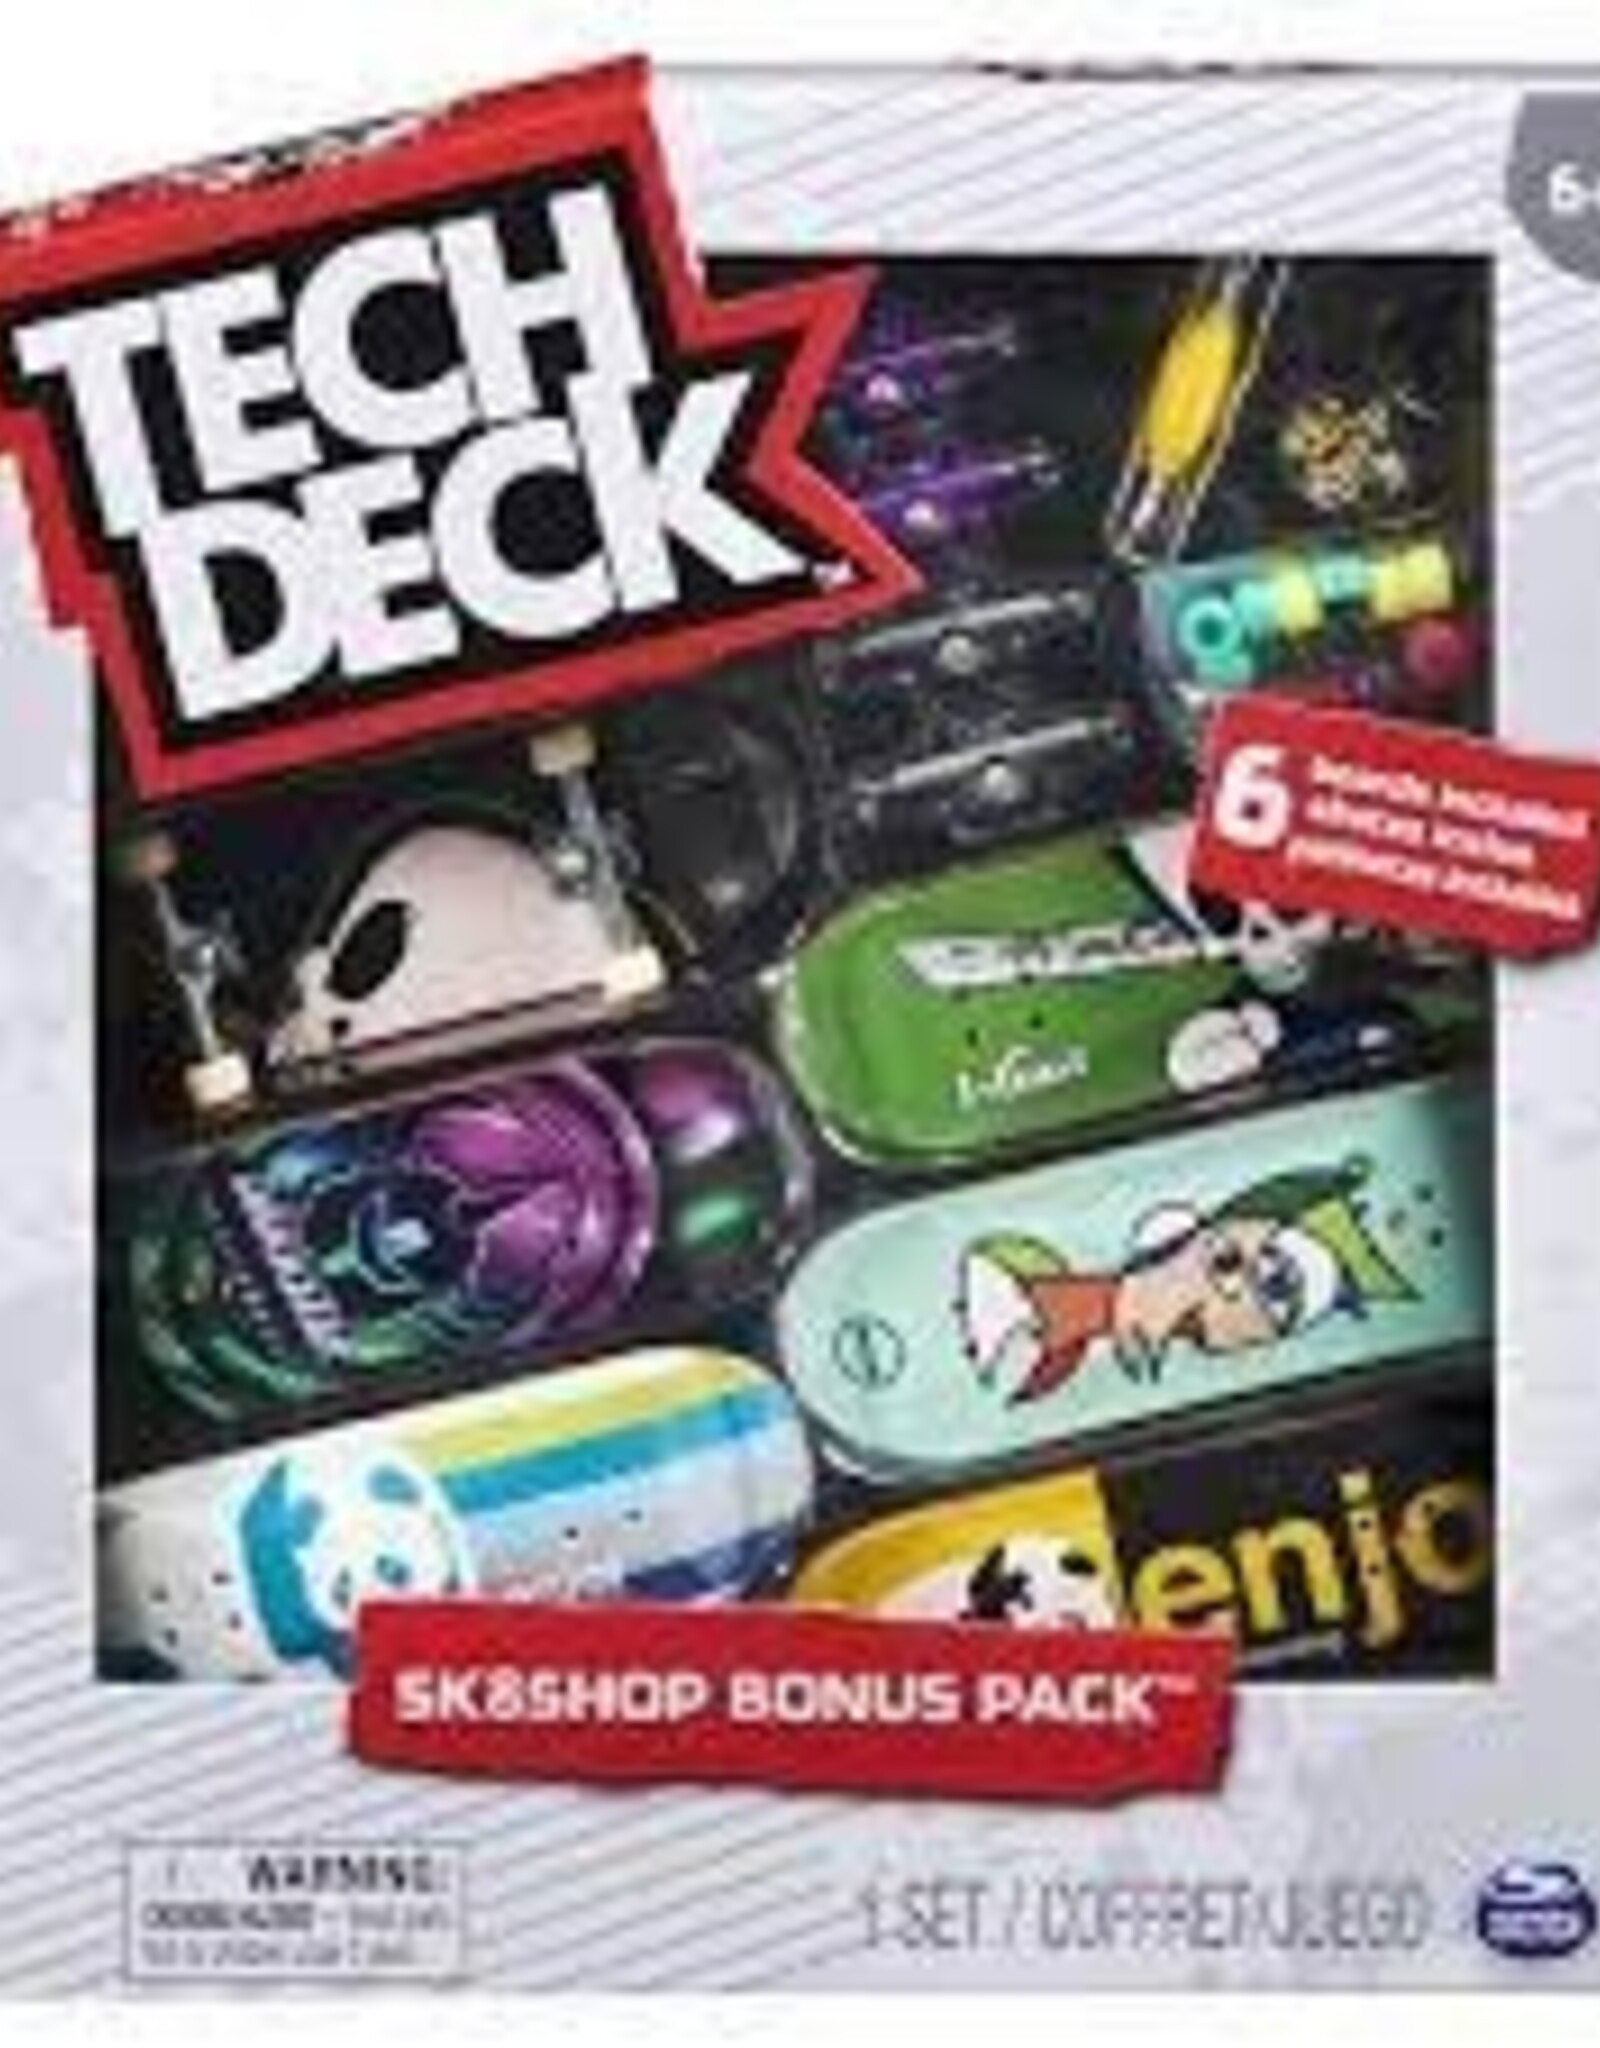 Gund/Spinmaster Tech Deck Skate Shop Bonus Pack